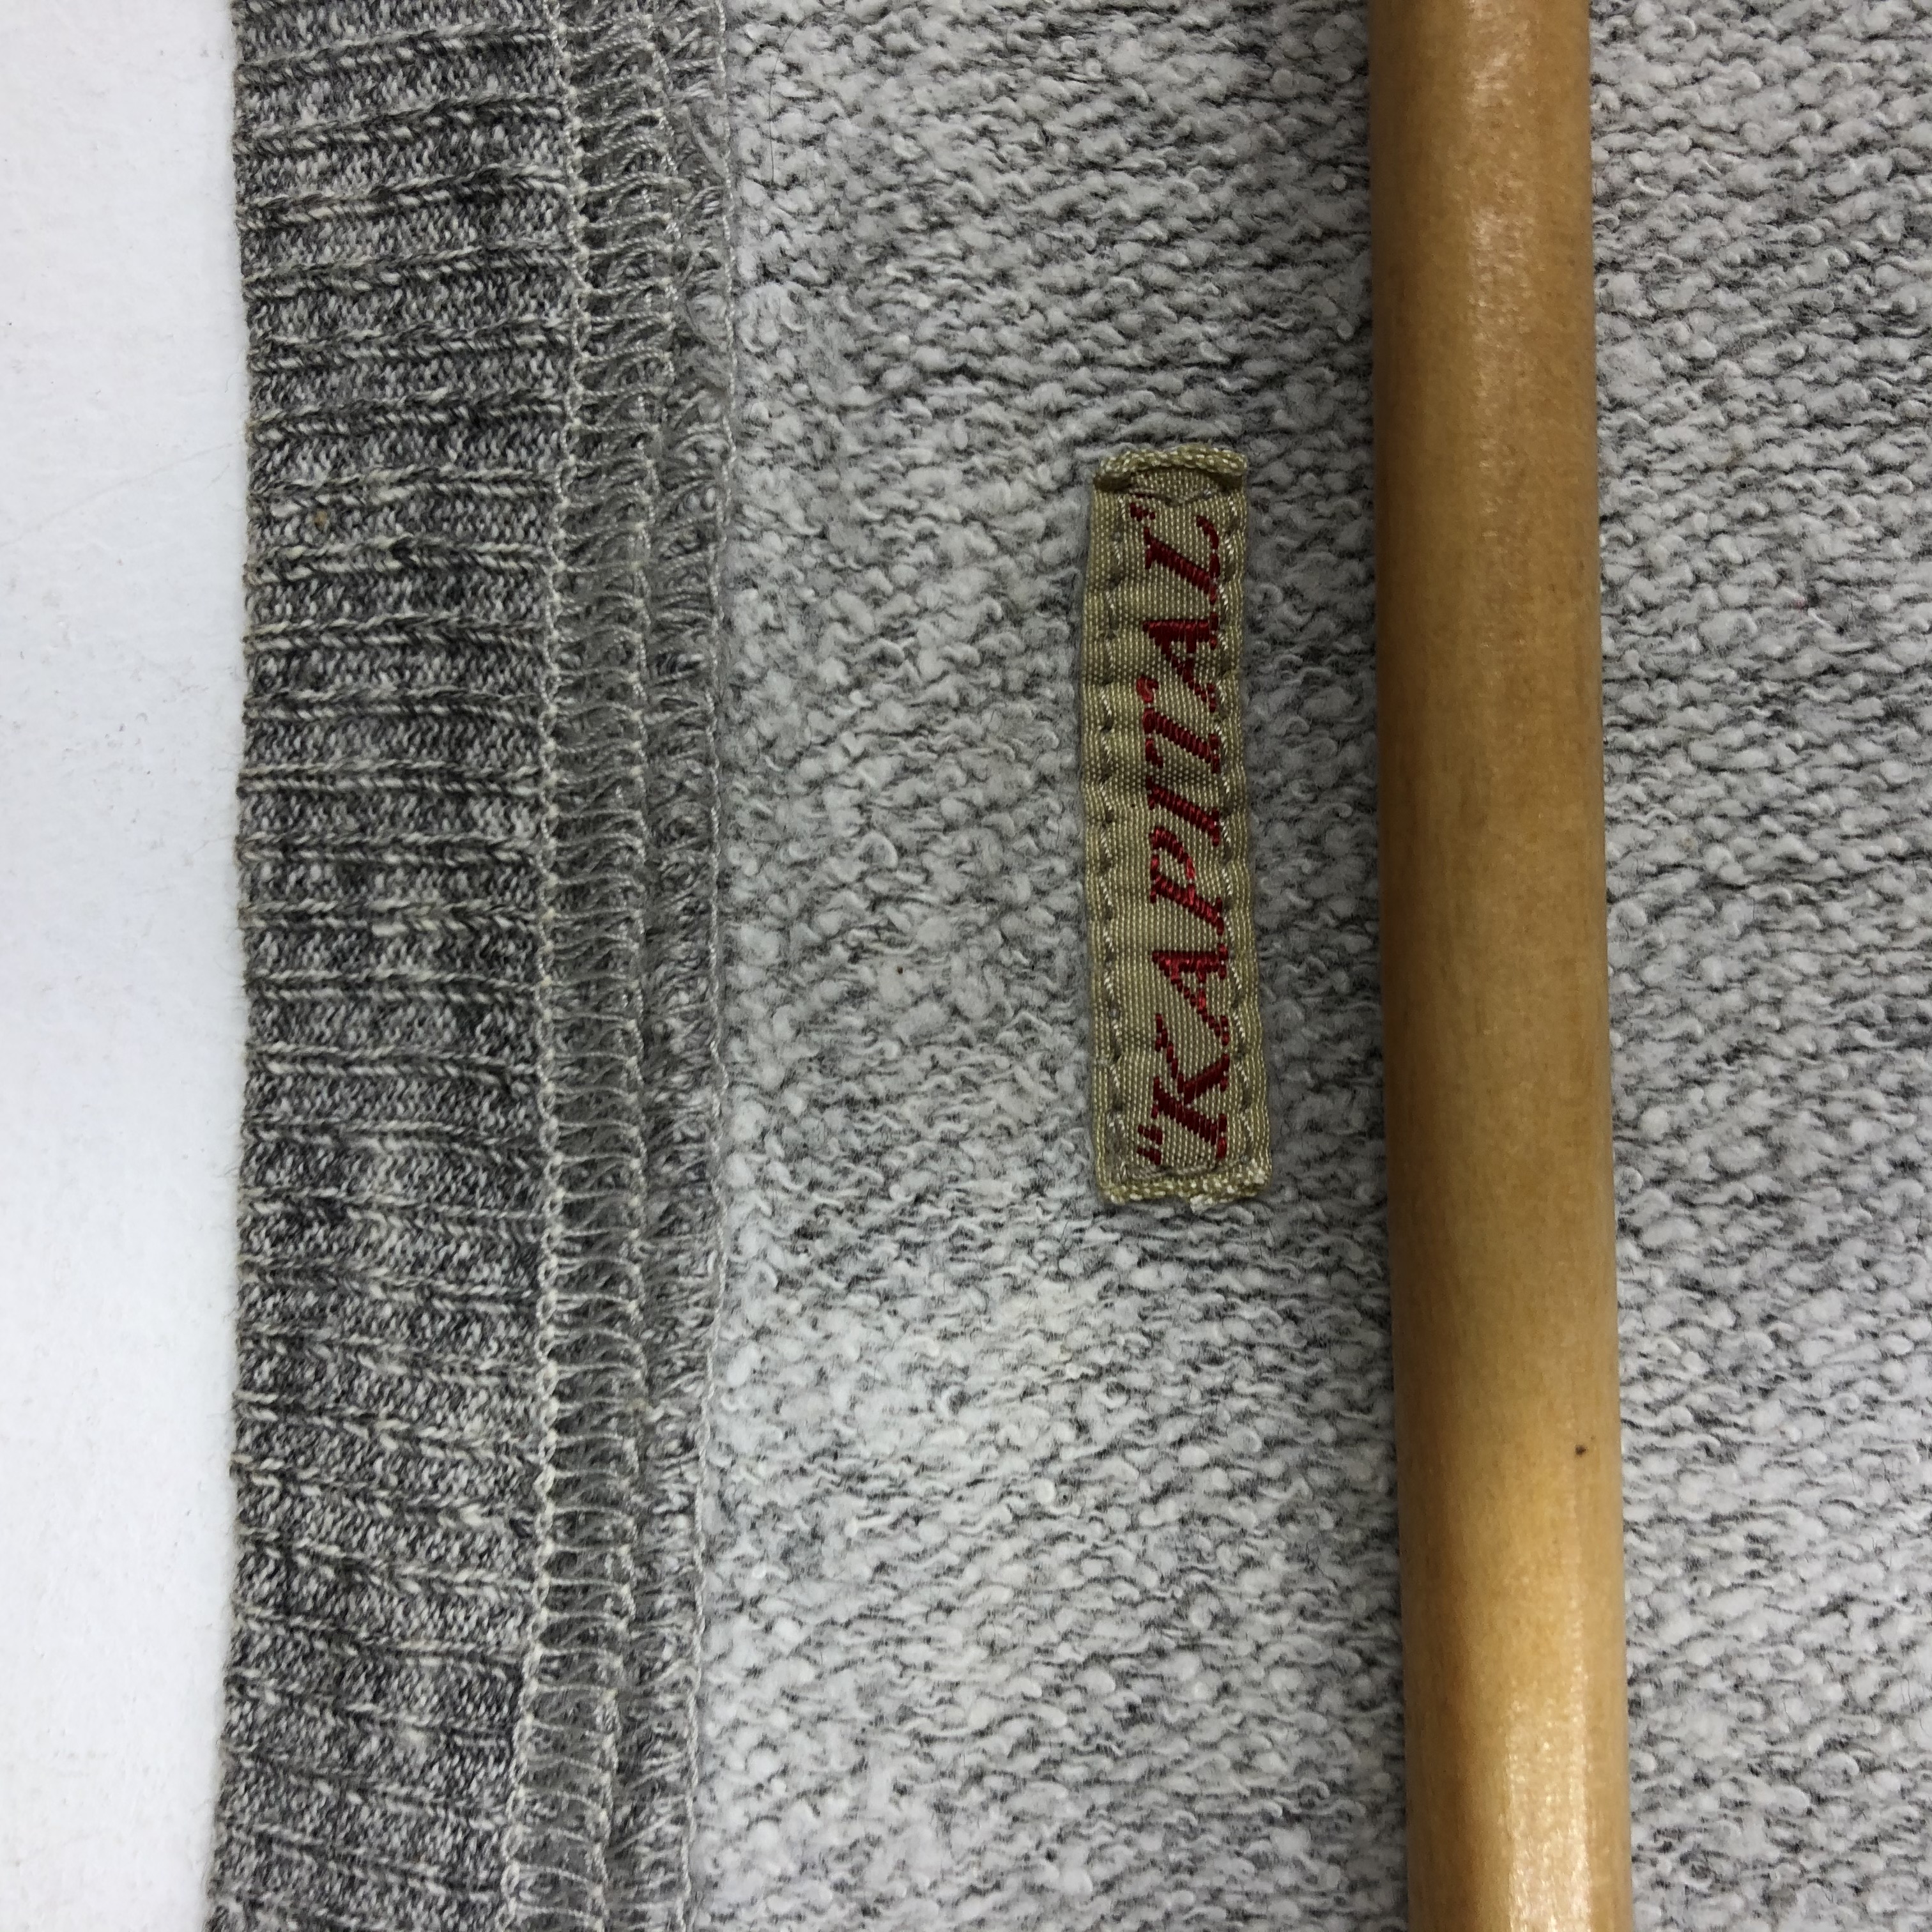 Japanese Brand Kapital Cardigan Sweatshirt Pullover Jumper - 6